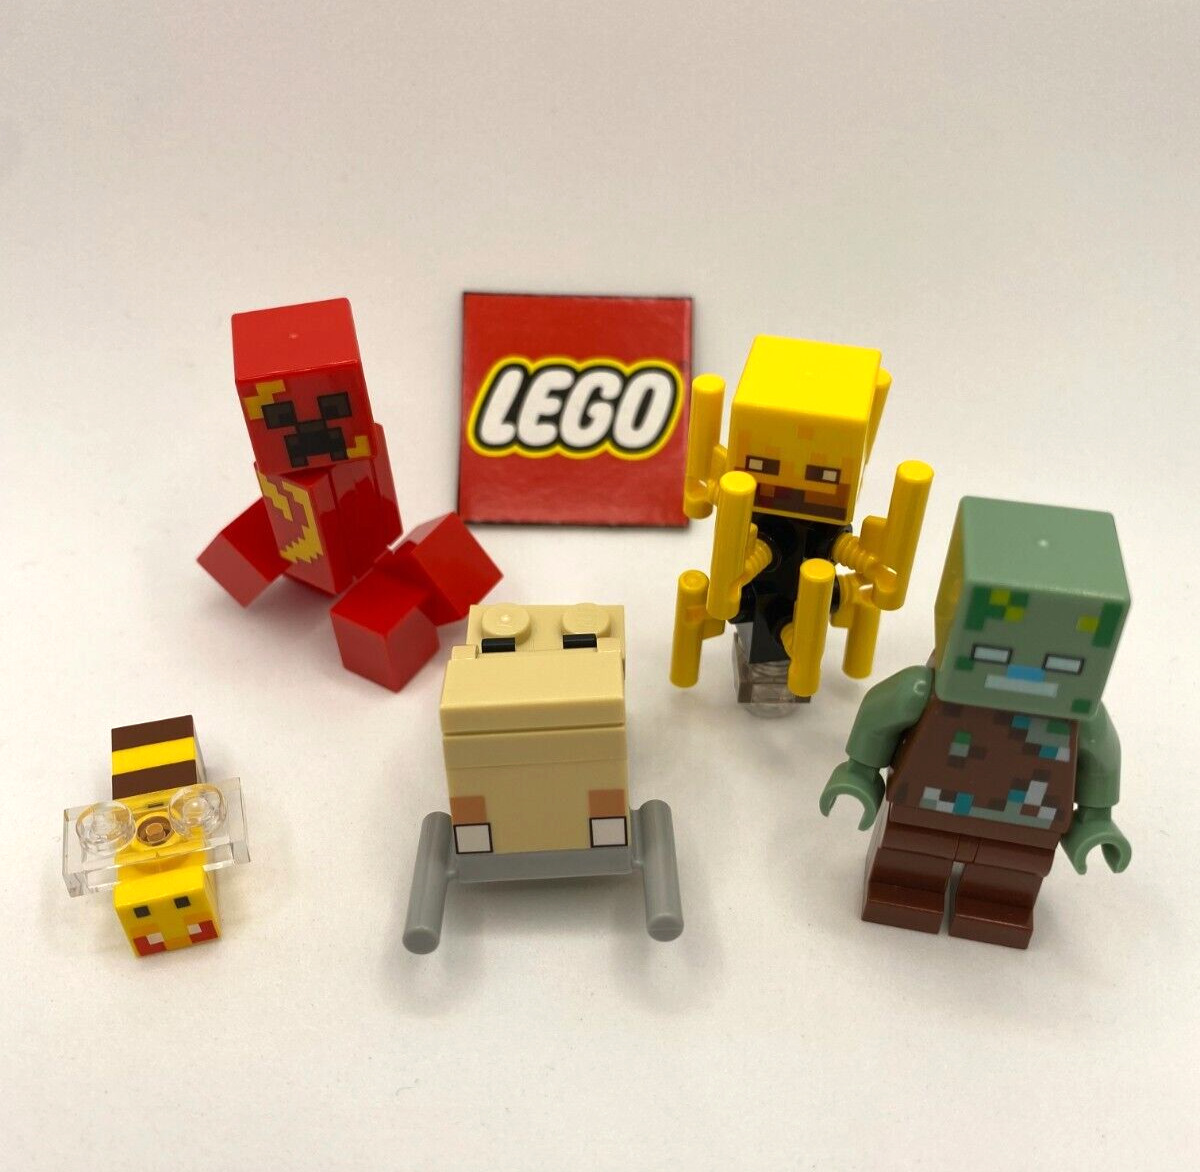 Lego Minecraft Minifigure Lot of Mobs - Blaze + Creeper + More! - Brand New!